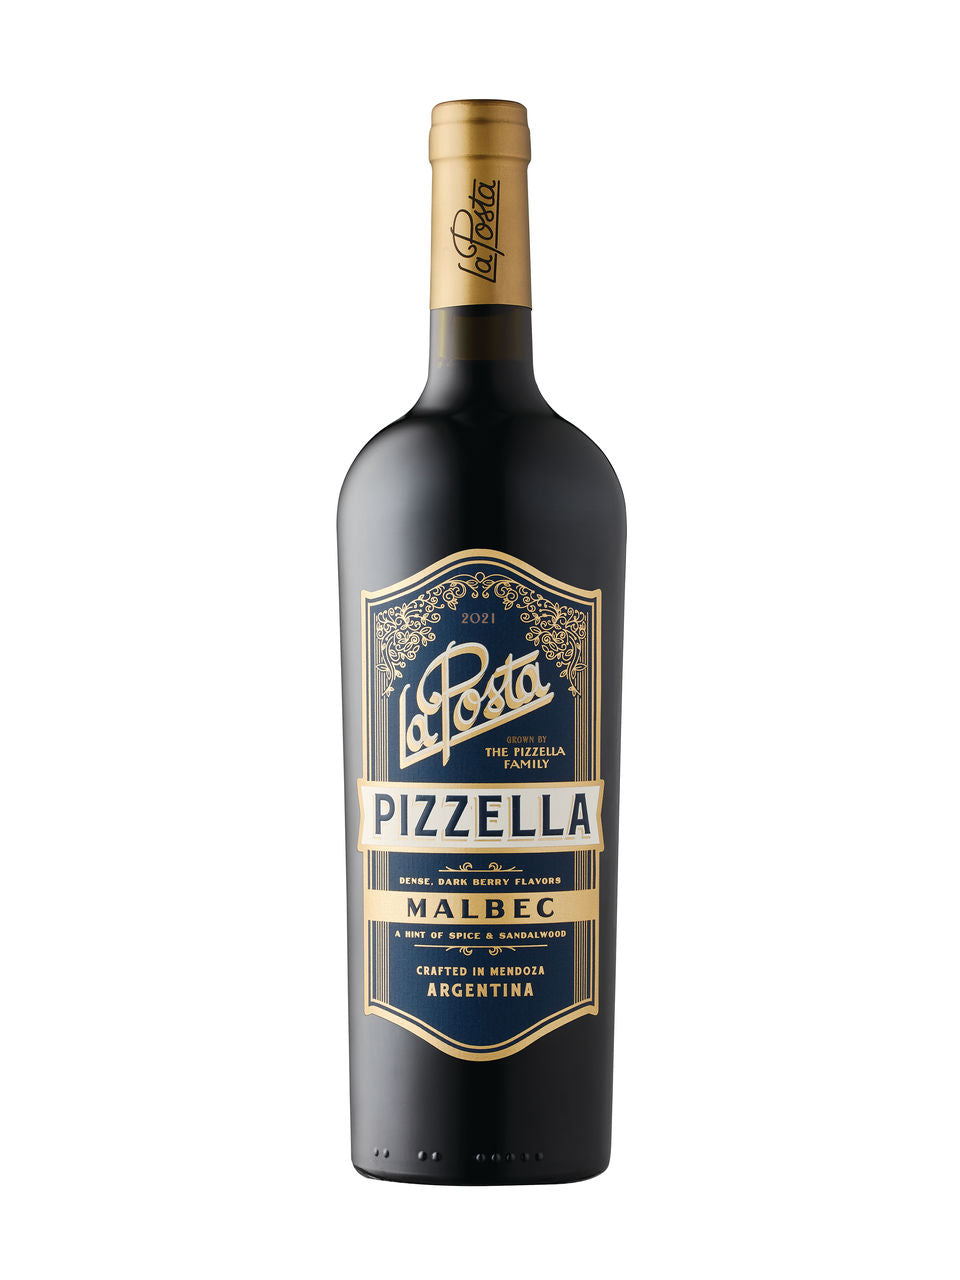 La Posta Pizzella Family Malbec 2021 750 ml bottle VINTAGES